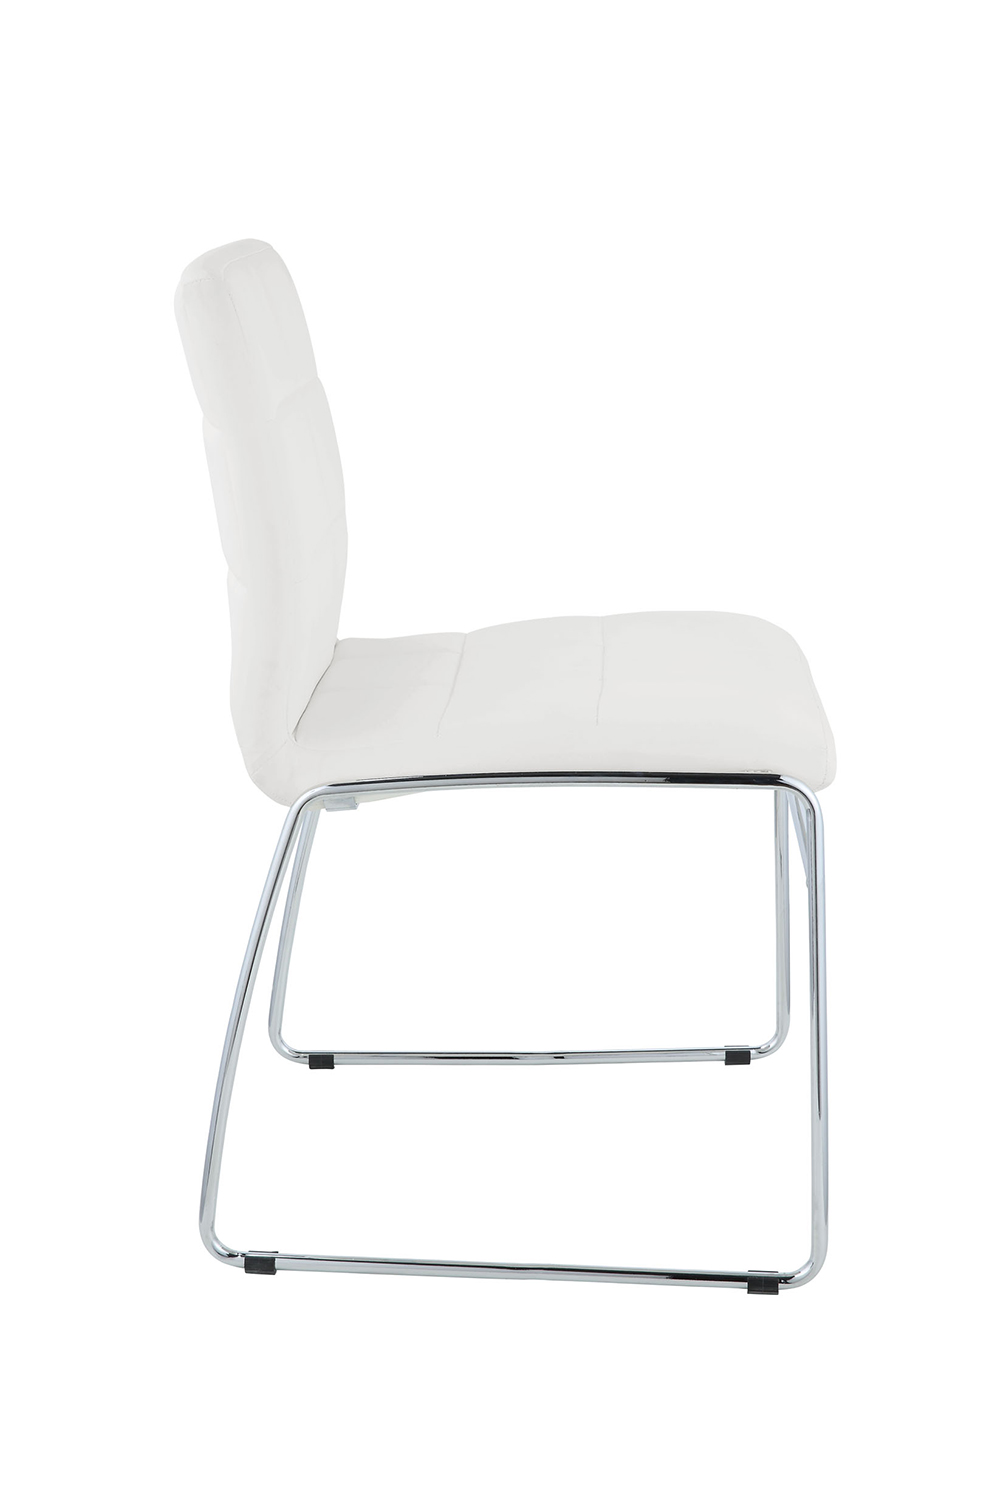 Acme Gordie Sled Metal Shape Side Chair - White Vinyl/Chrome